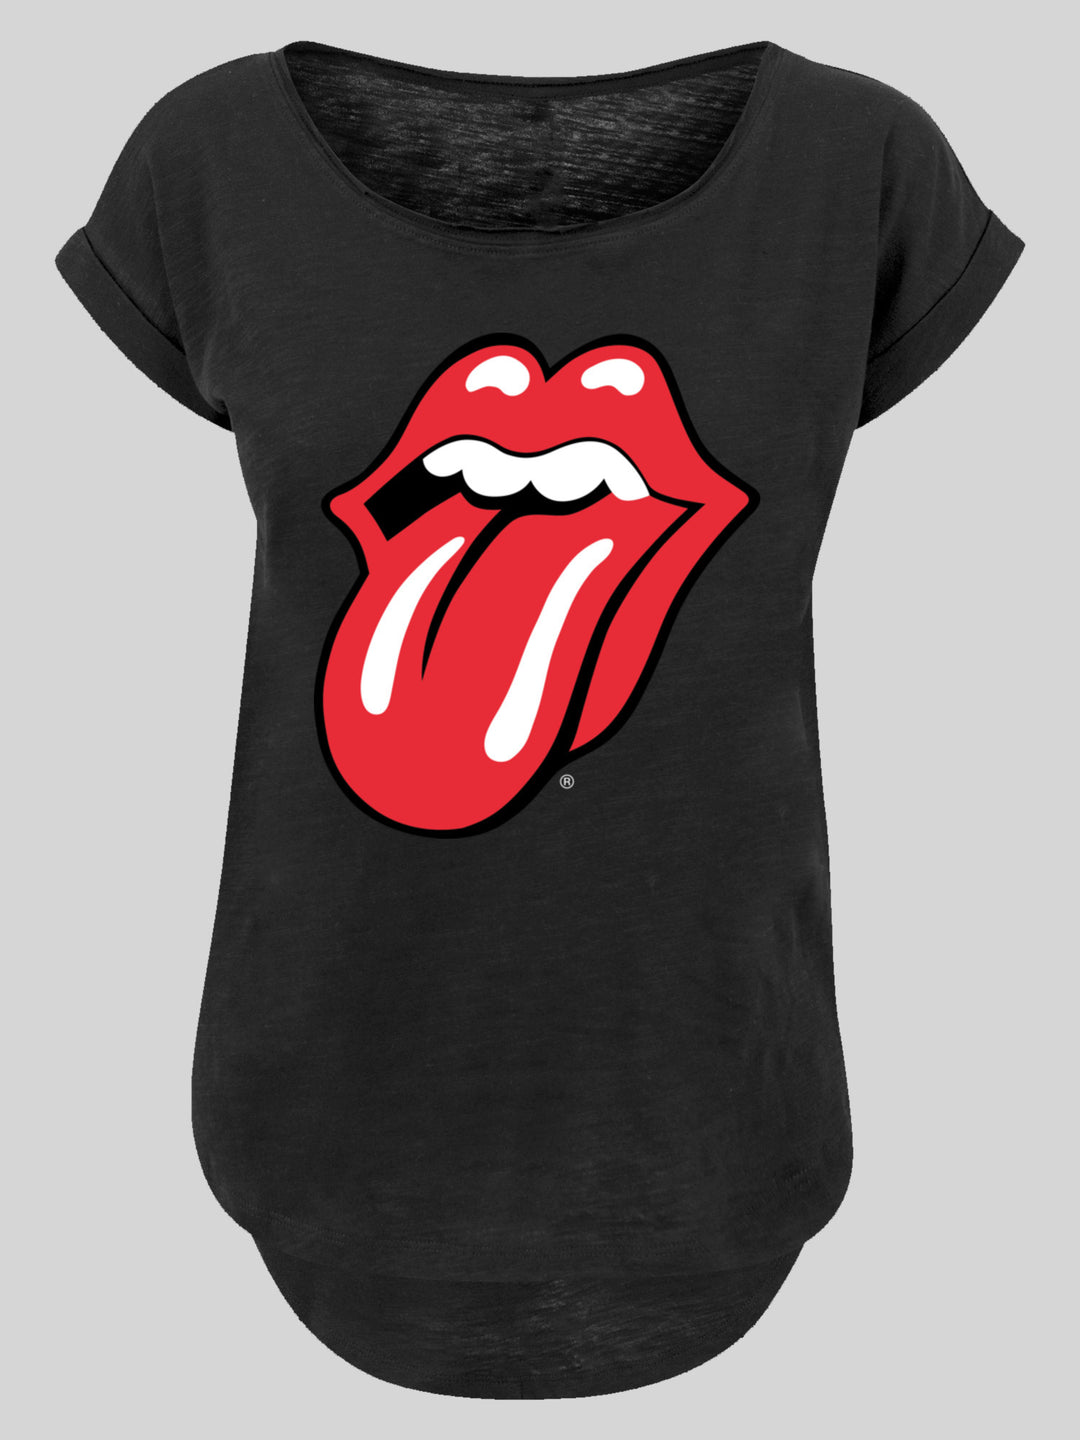 | F4NT4STIC Tee Premium – The | Classic Rolling Tongue Stones T-Shirt Long Ladies